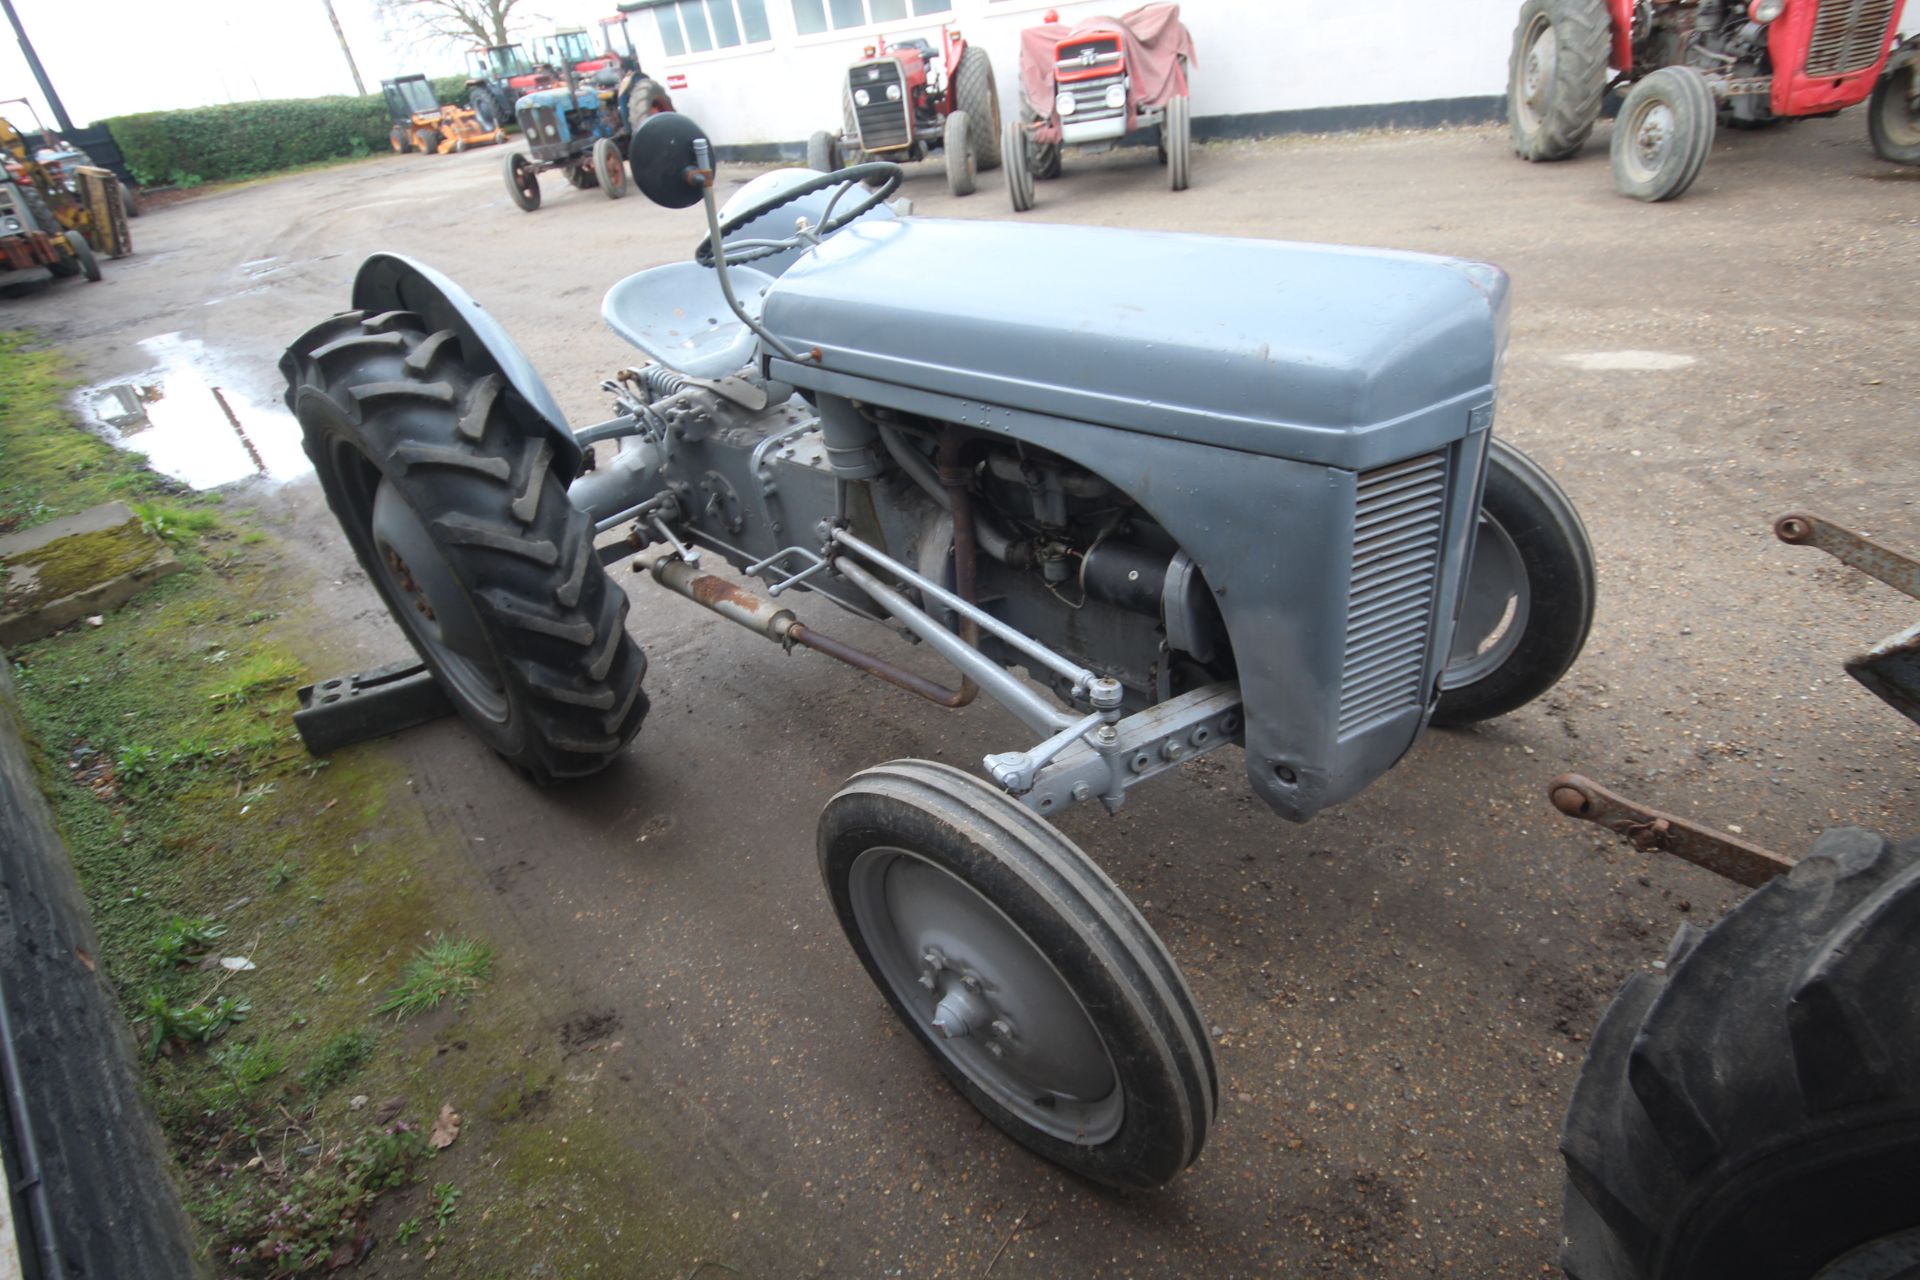 Ferguson TEA 20 Petrol 2WD tractor. Registration 771 XUN. 1948. Serial number 57289. 11.2-28 rear - Image 2 of 44